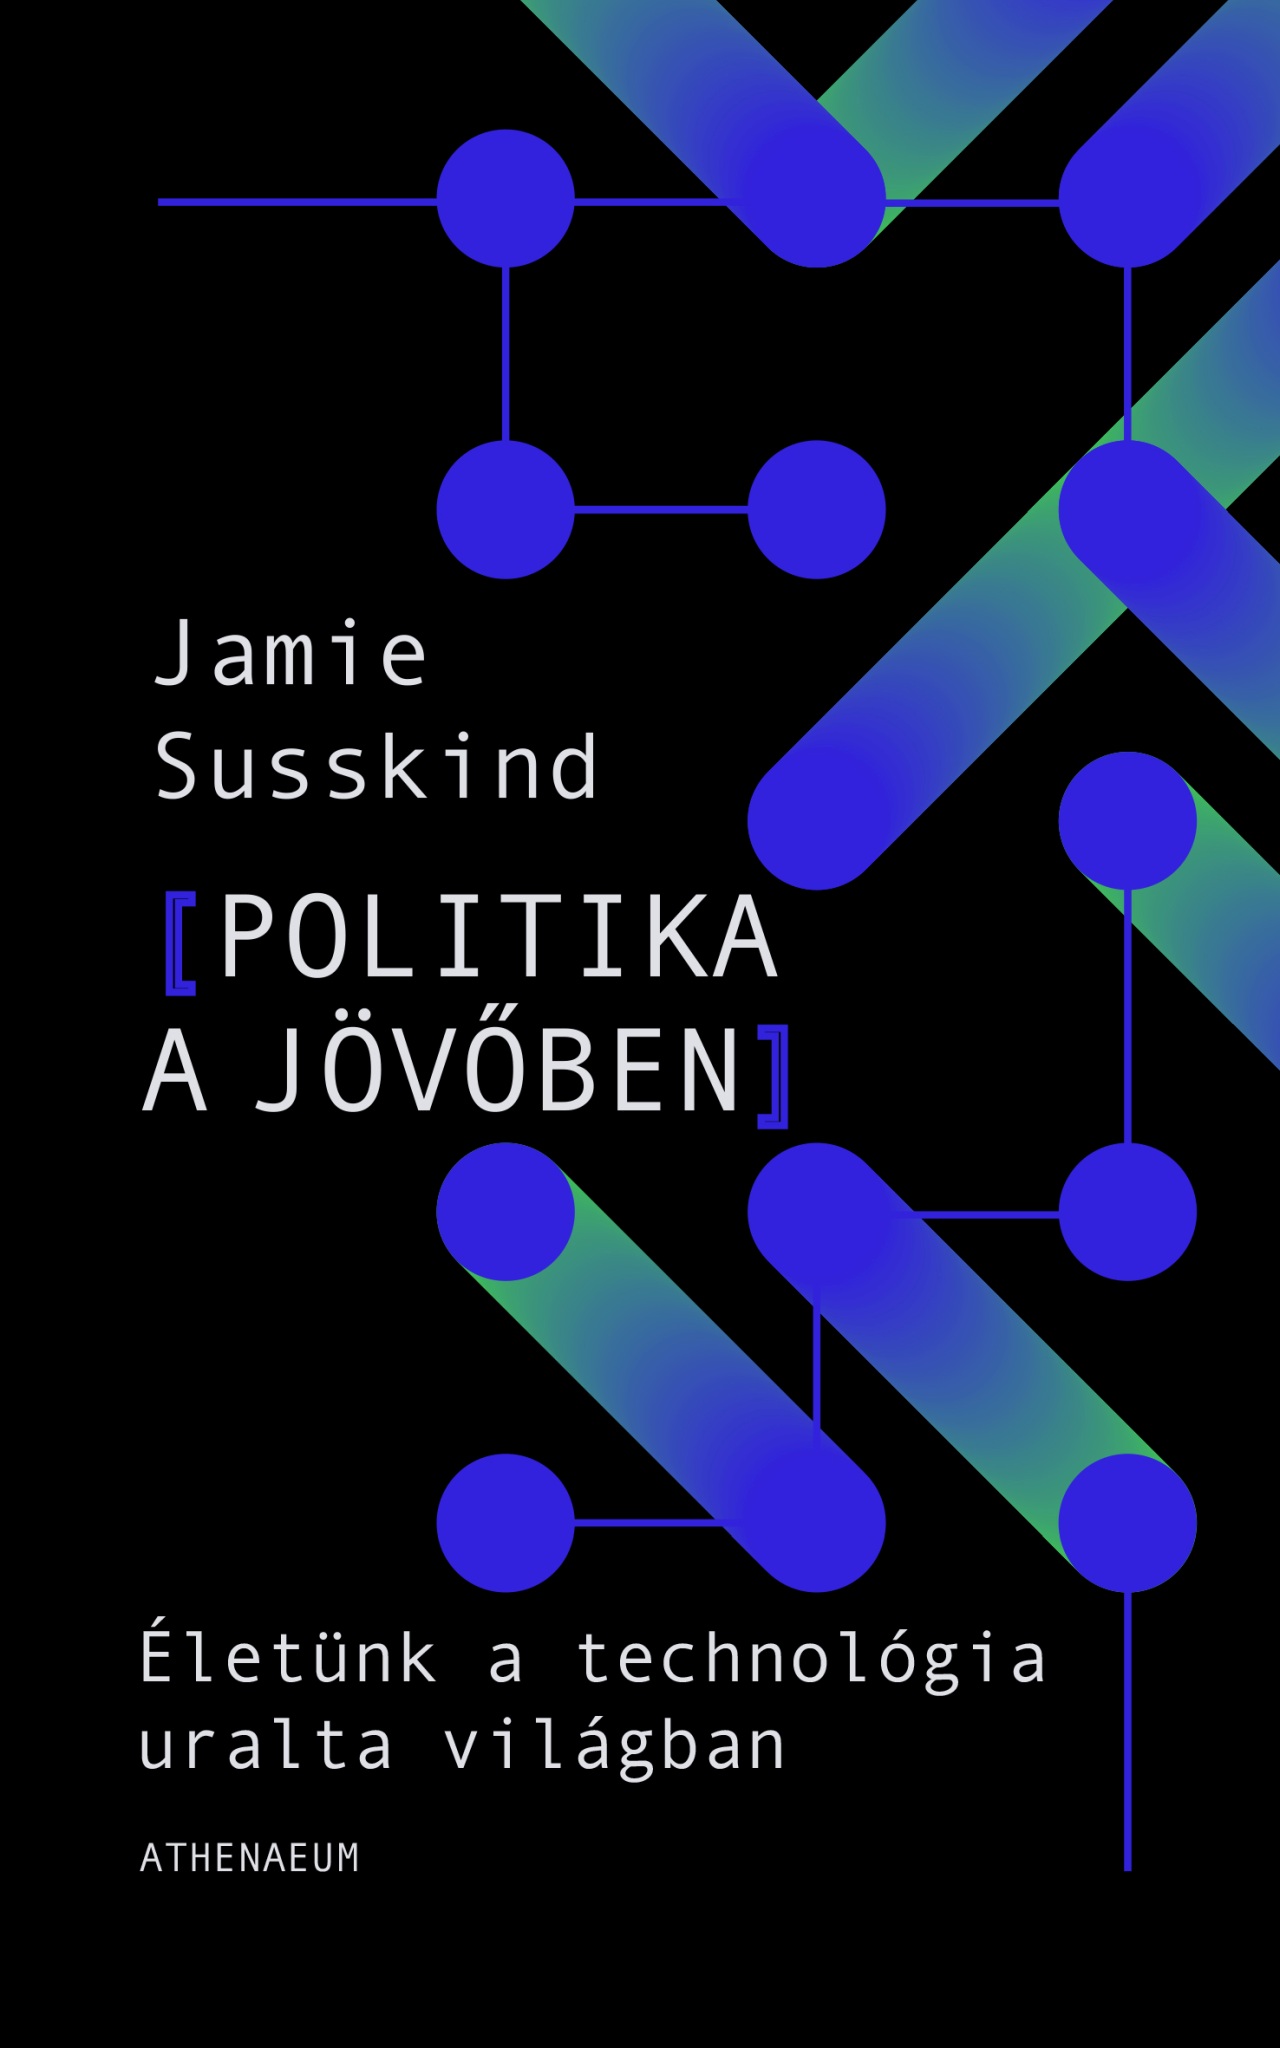 Jamie Susskind: Politika a jövőben